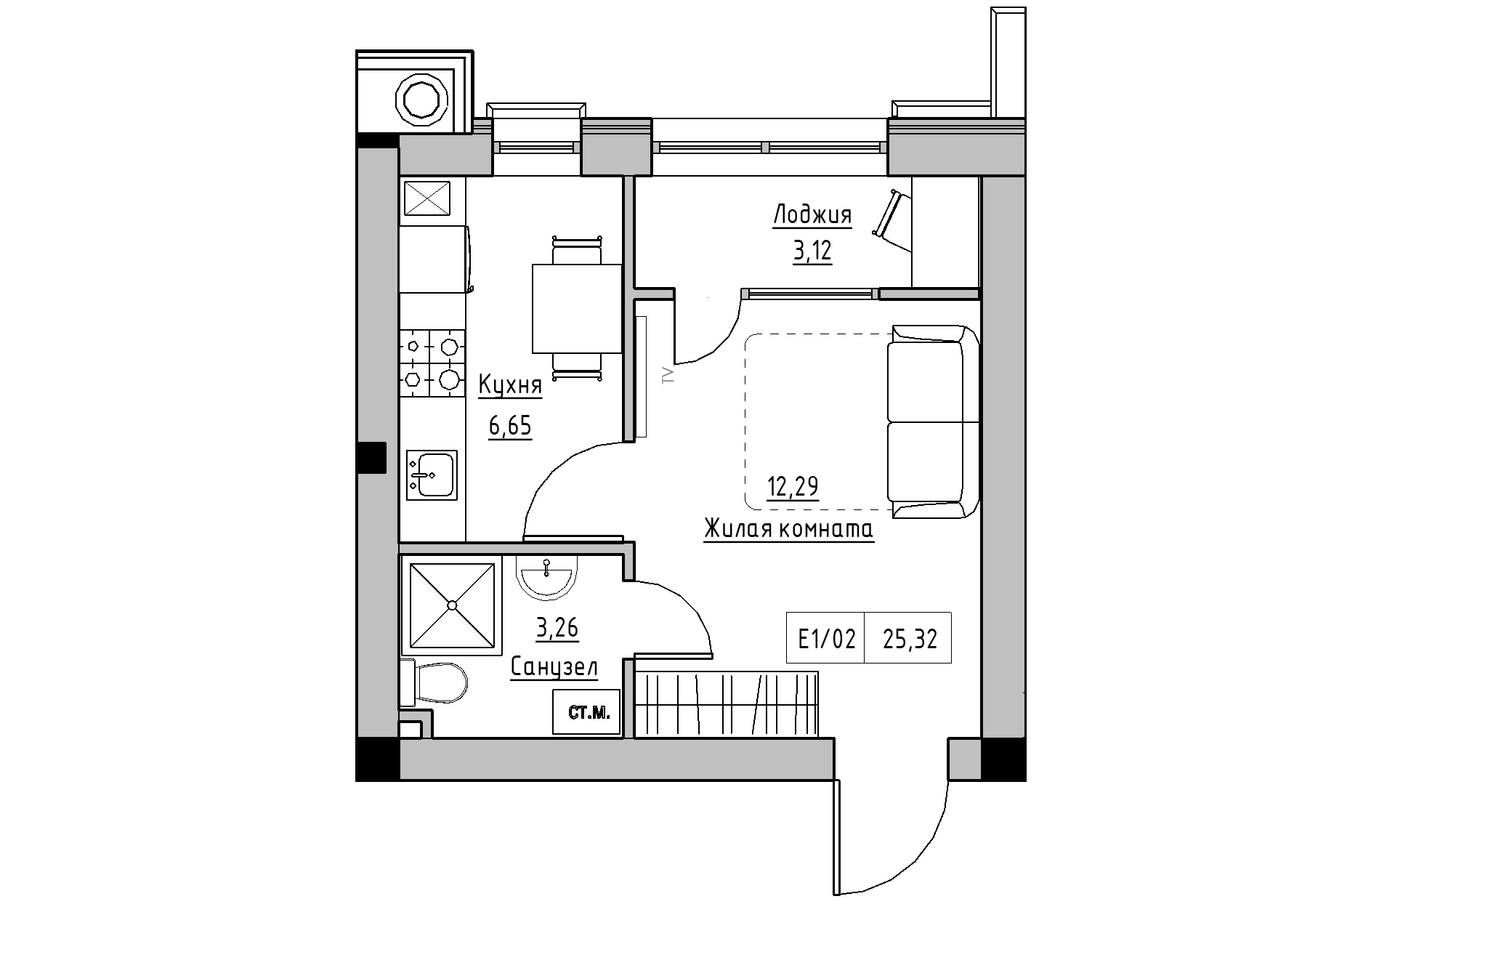 Planning 1-rm flats area 25.32m2, KS-010-05/0004.